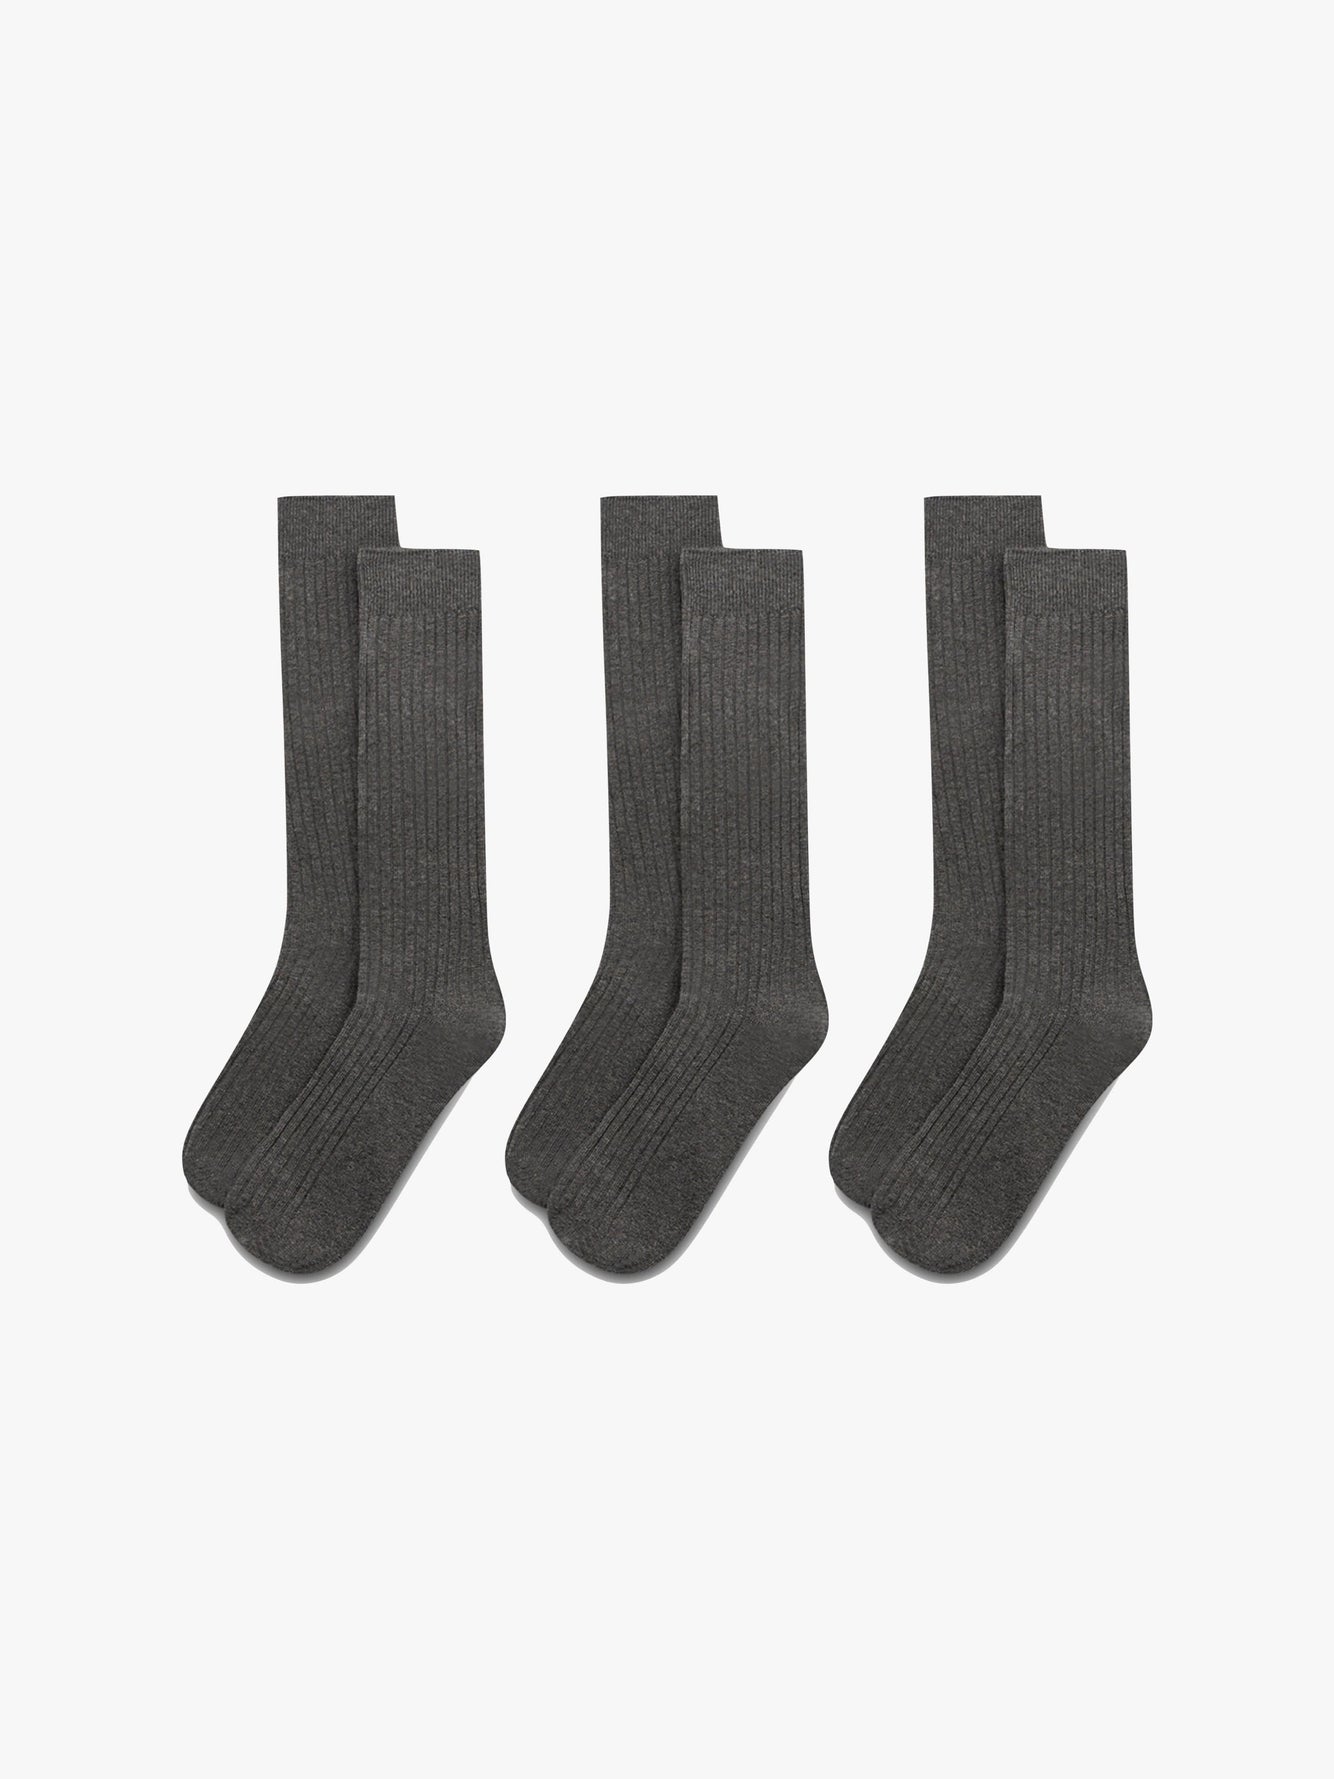 Grey Ribbed Socks (3 pack) - Grand Le Mar